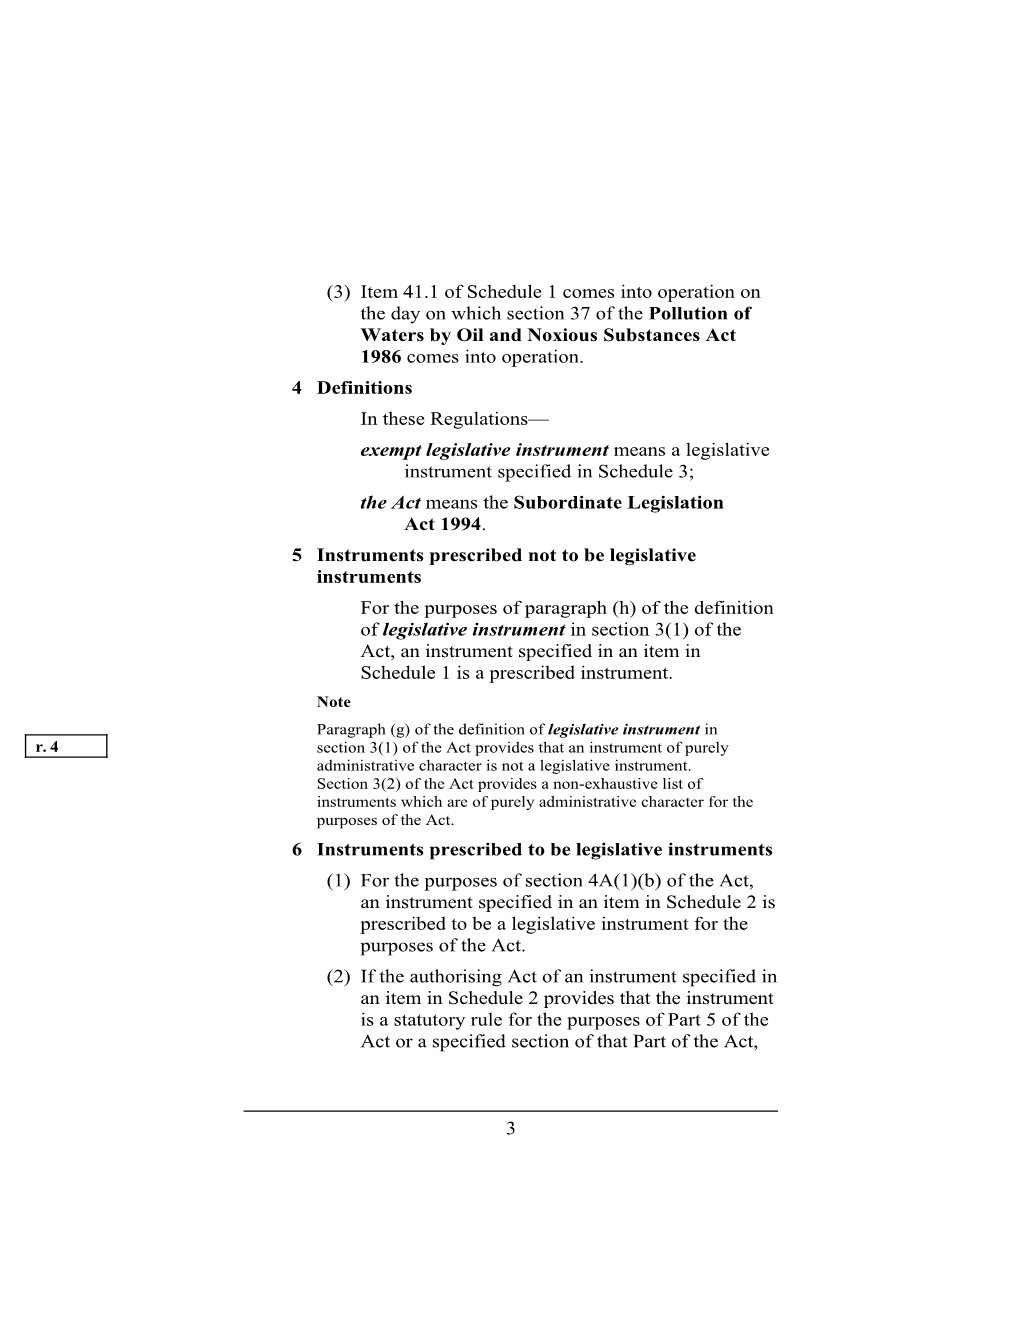 Subordinate Legislation (Legislative Instruments) Regulations 2011